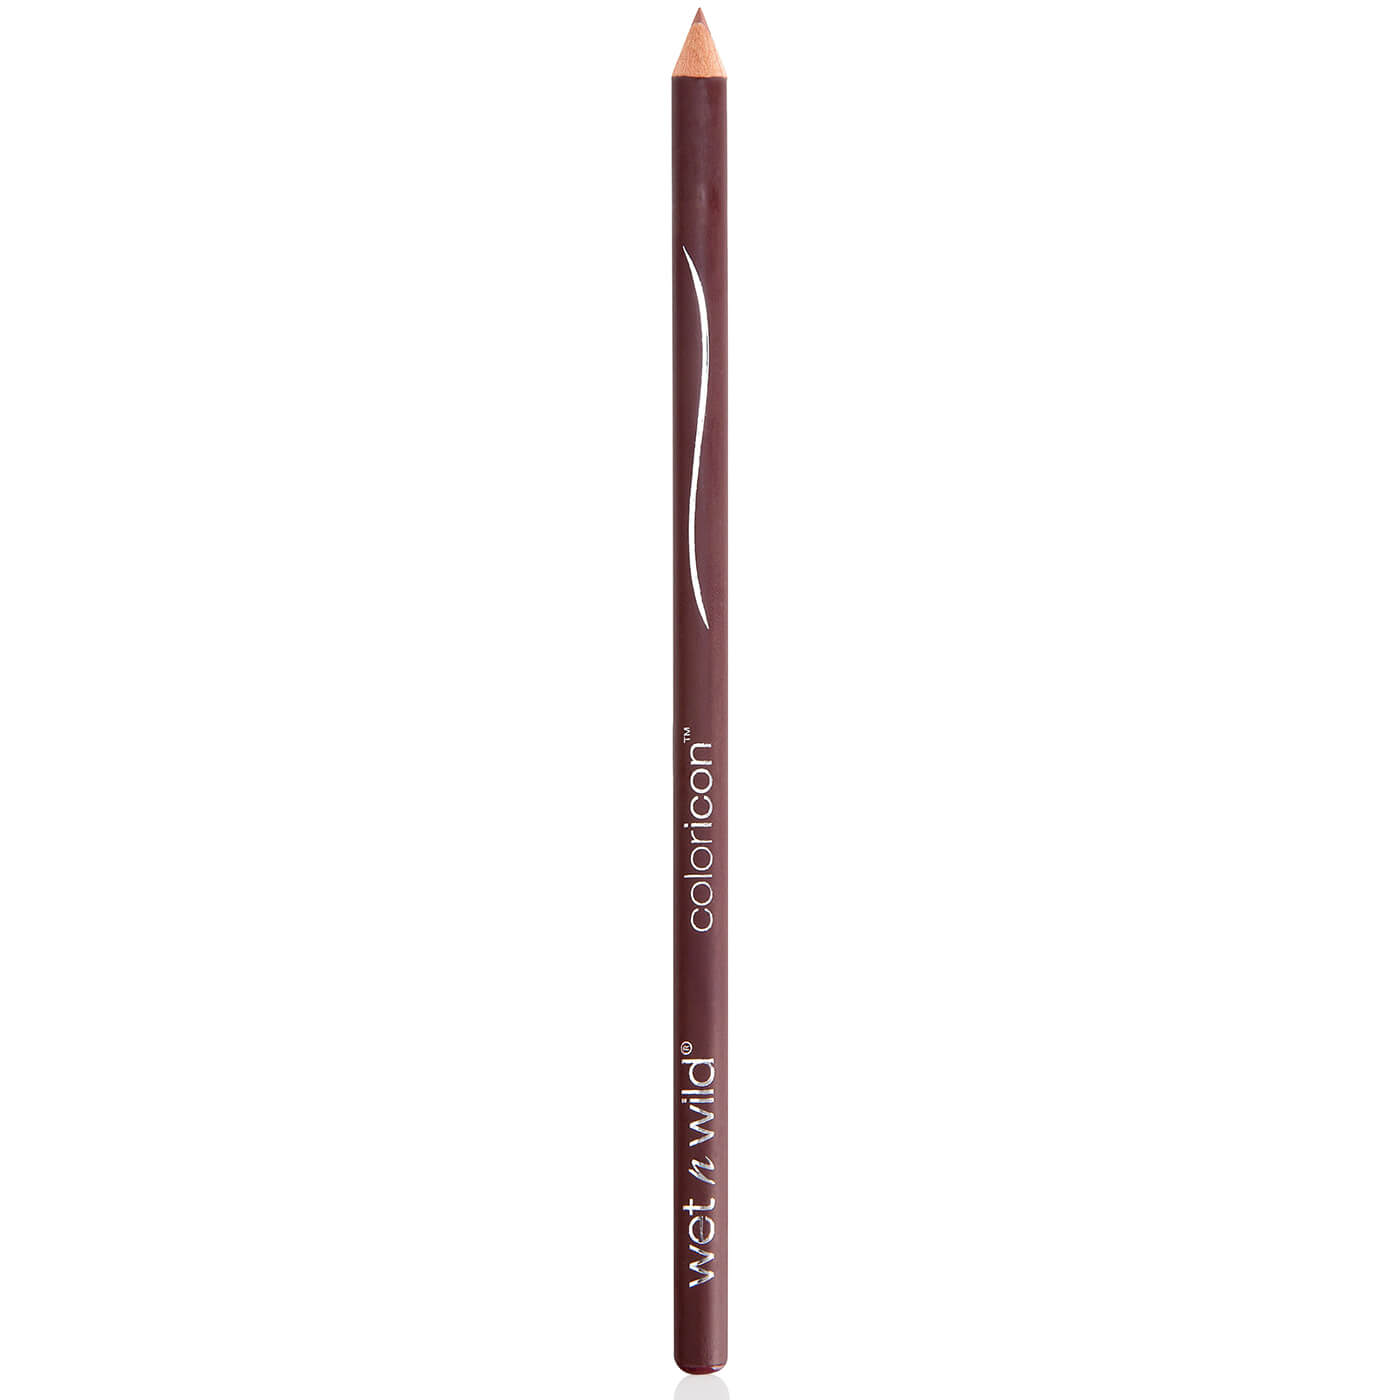 Photos - Lipstick & Lip Gloss Wet n Wild coloricon Lipliner Pencil 1.4g  - Willow E712 (Various Shades)